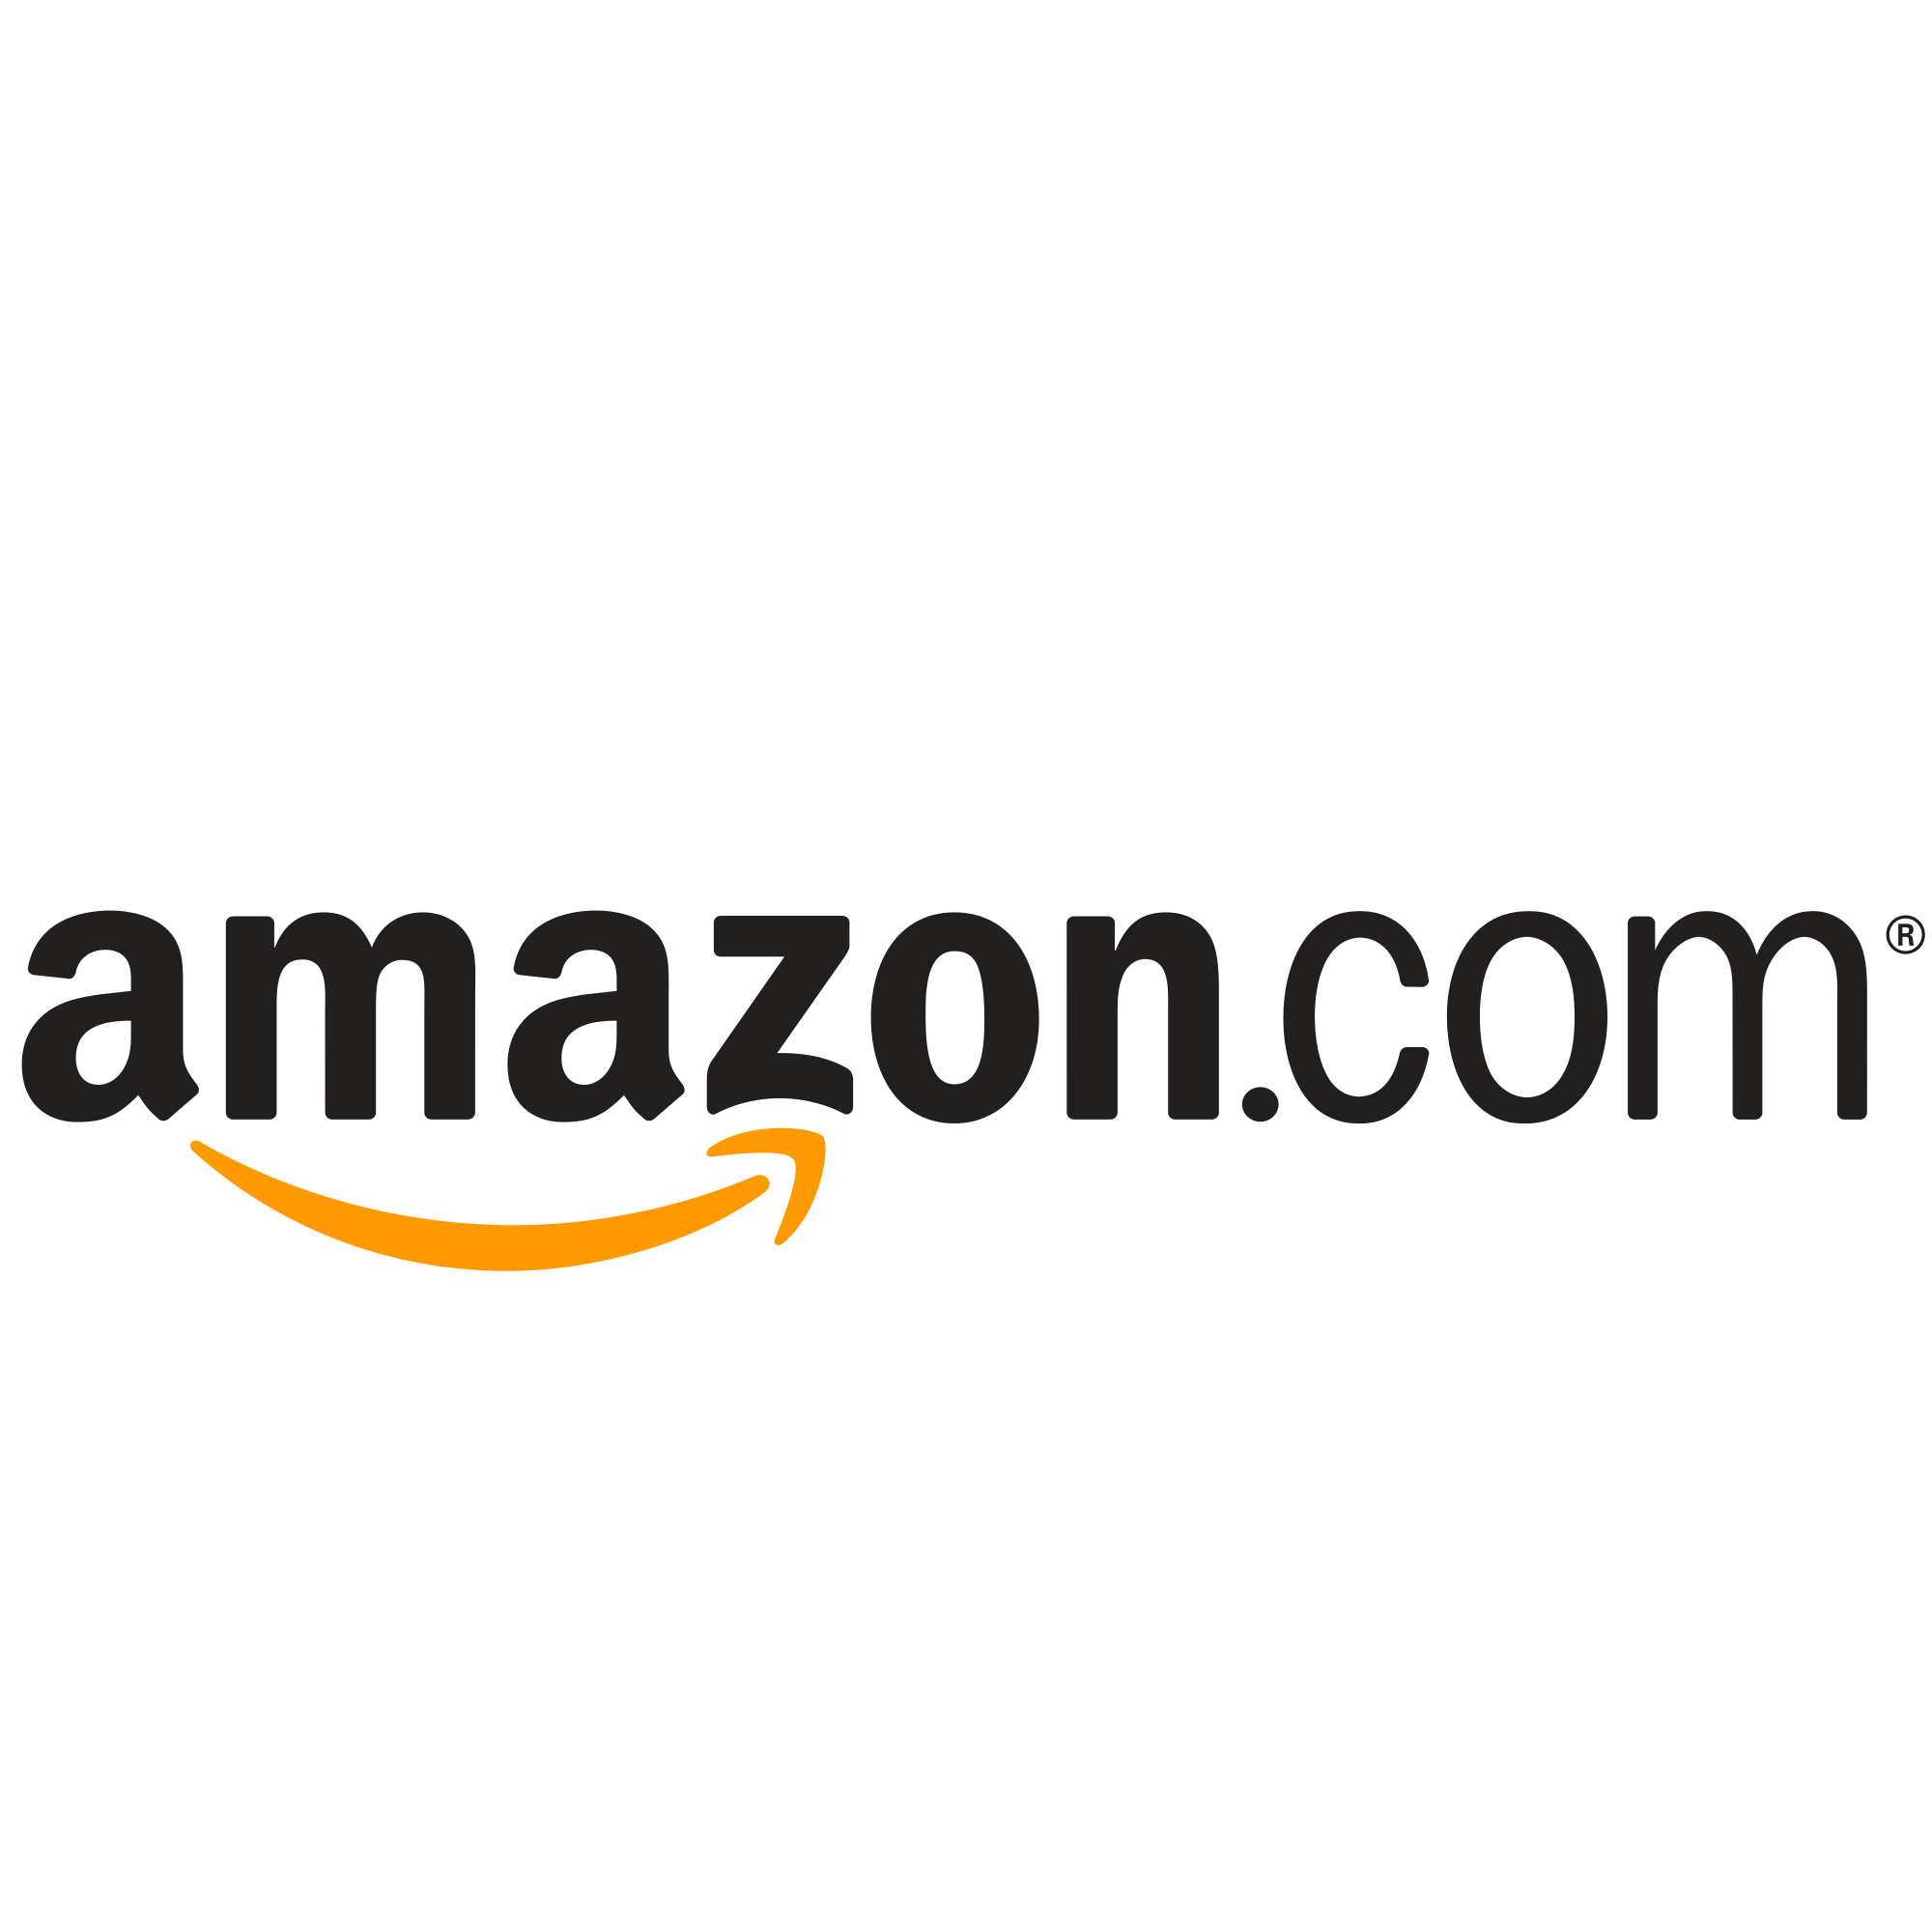 Amazon Smile Logo - Amazon.com LOGO | Building Successful Online Business